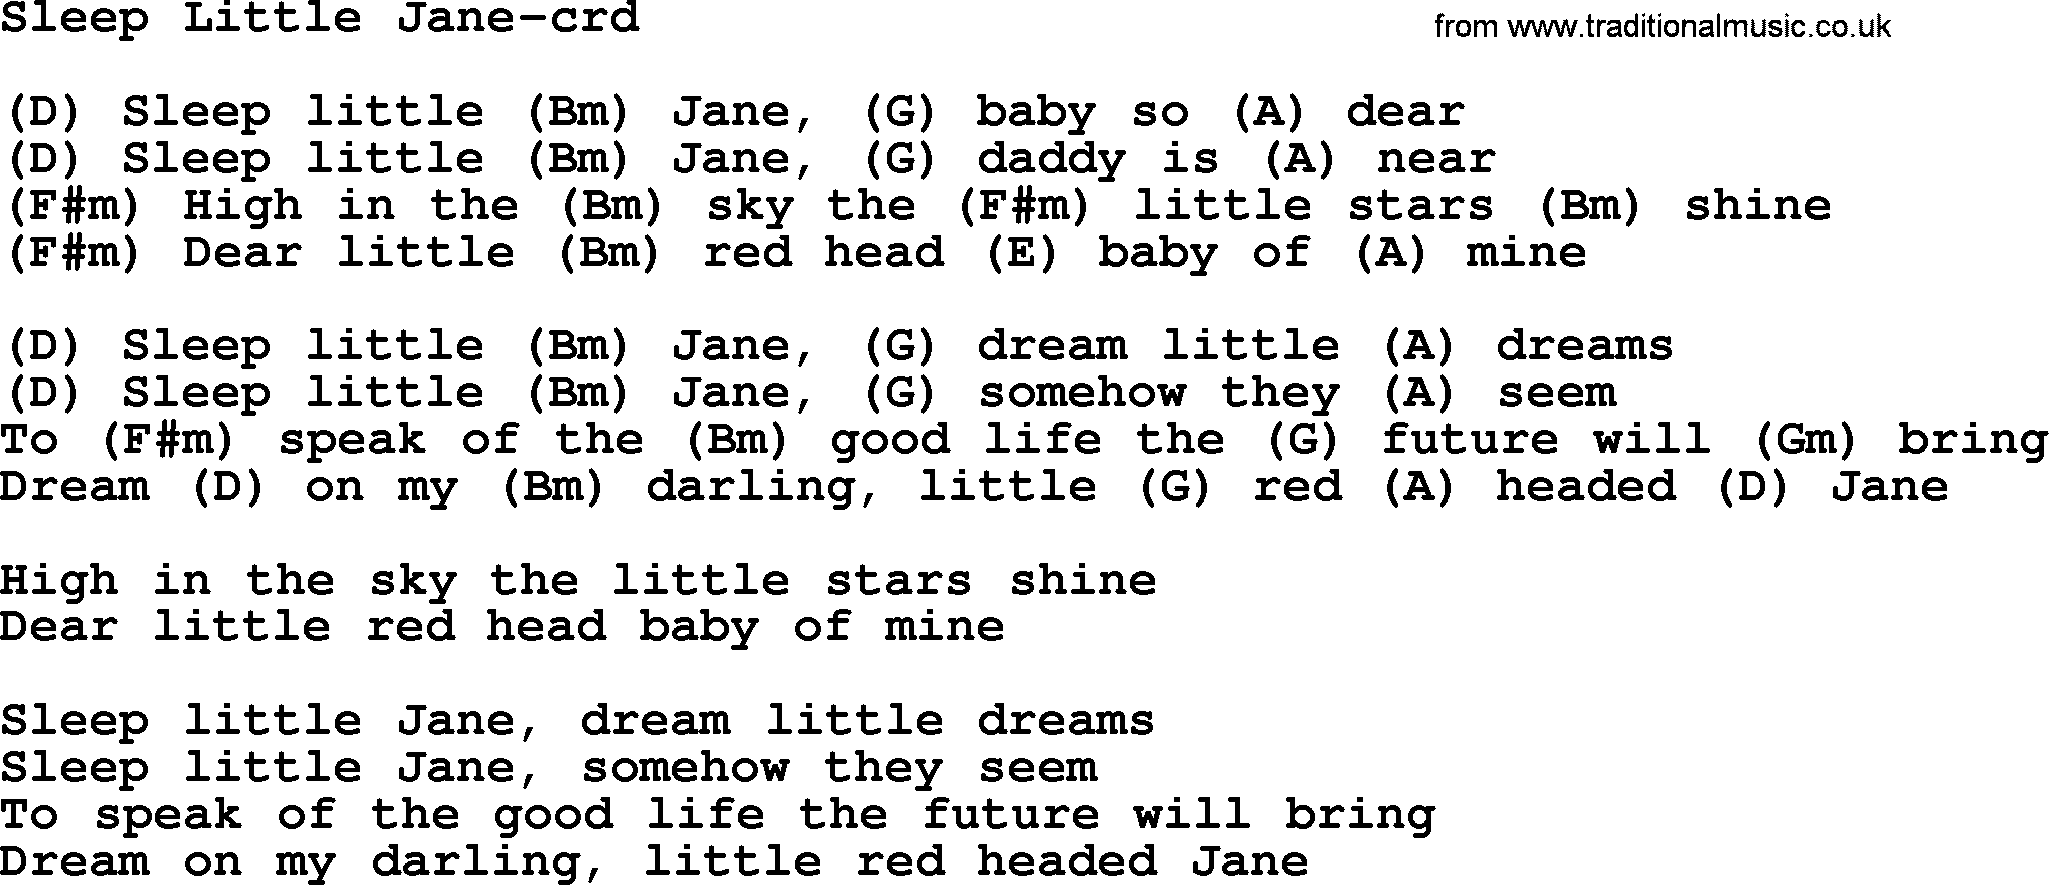 Gordon Lightfoot song Sleep Little Jane, lyrics and chords